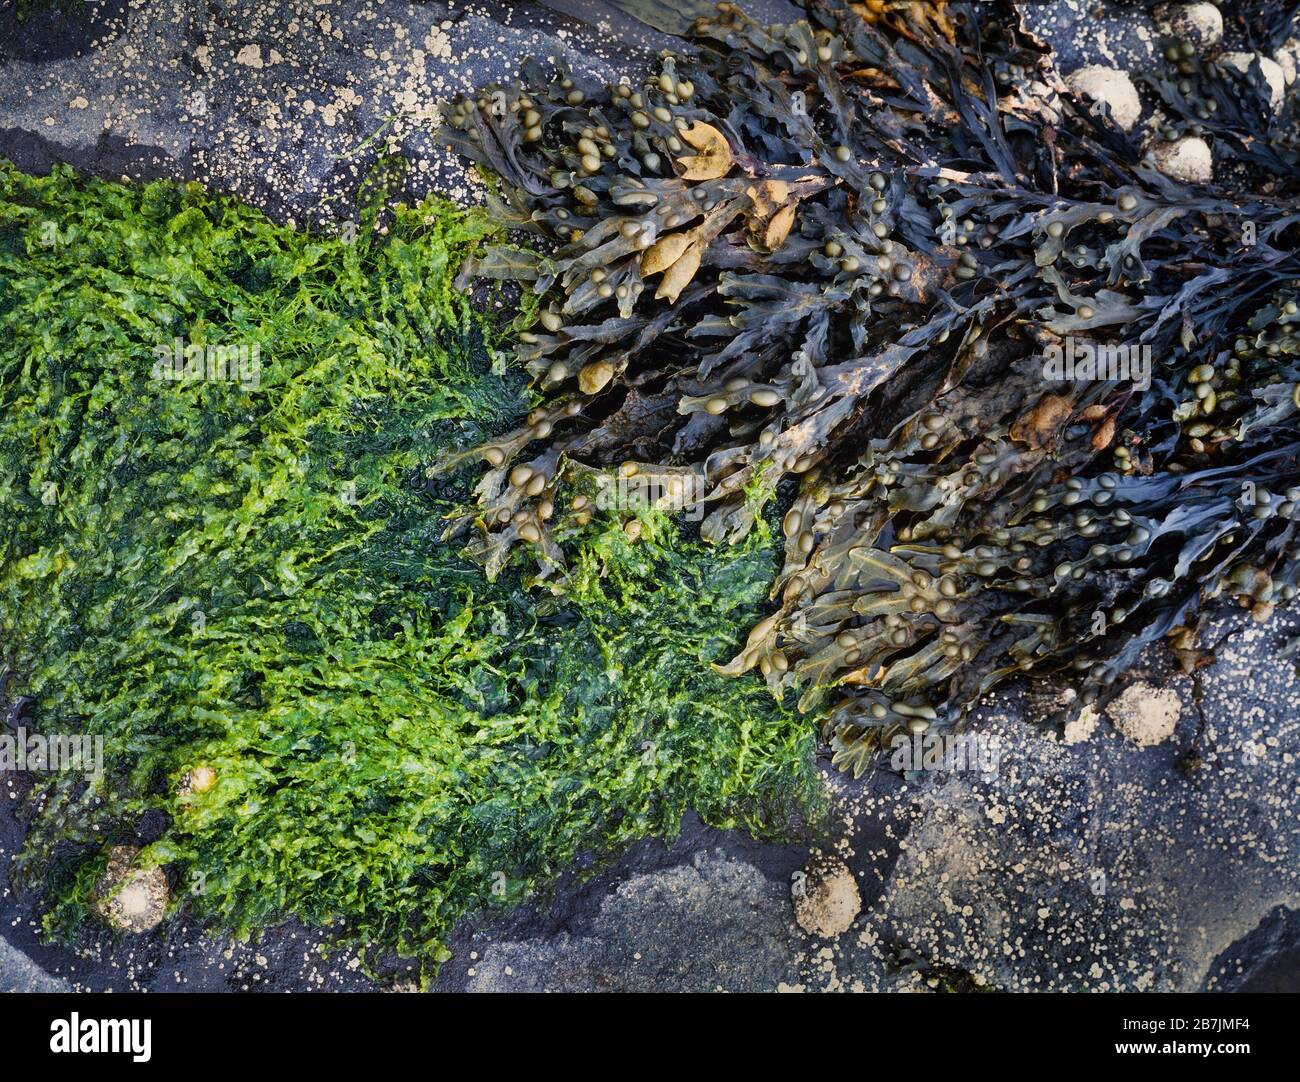 Vita marina da spiaggia, alghe, Bladderrack (Populee) Fucus vesiculosus, alghe verdi Foto Stock